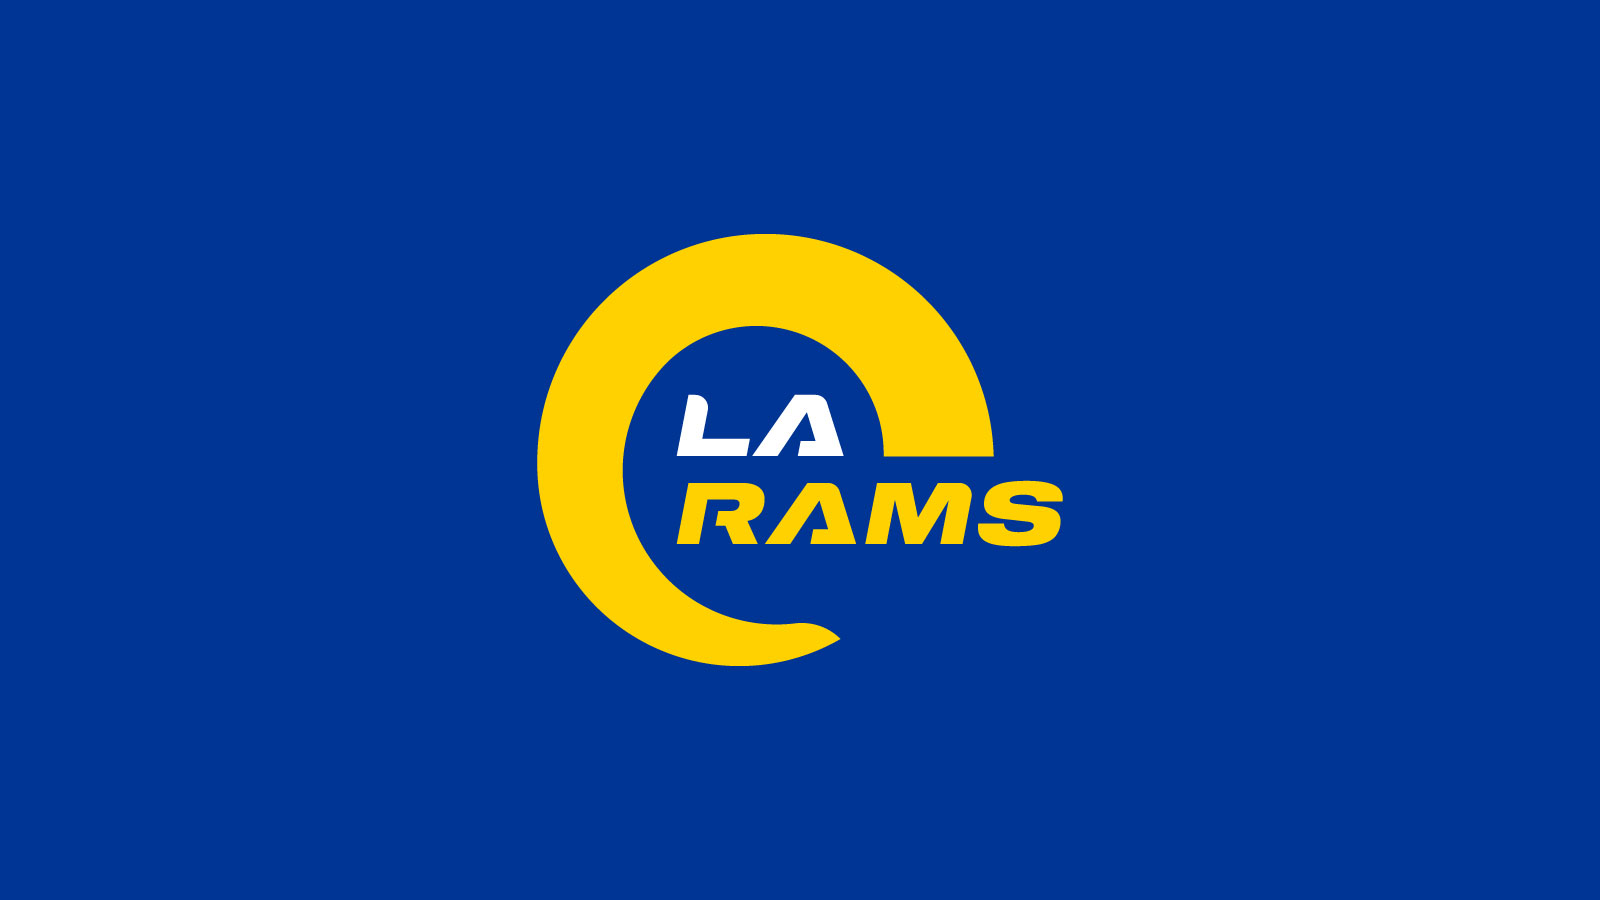 Los Angeles Rams unveil new logo, colors as part of rebranding